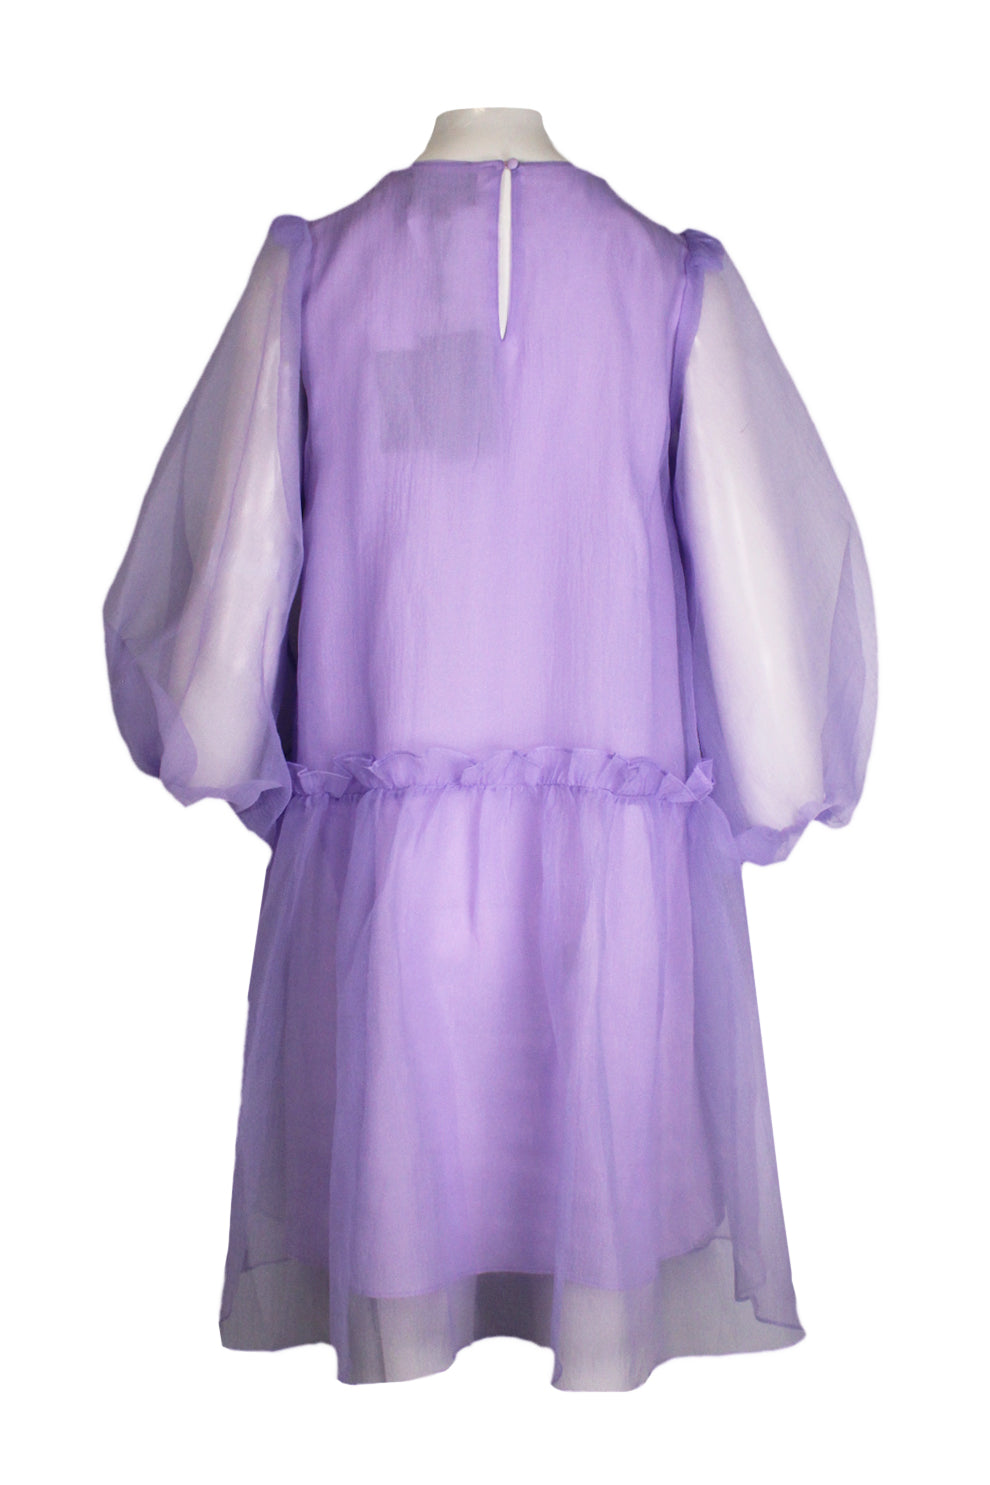 back view of cynthia rowley pastel purple sheer dress 